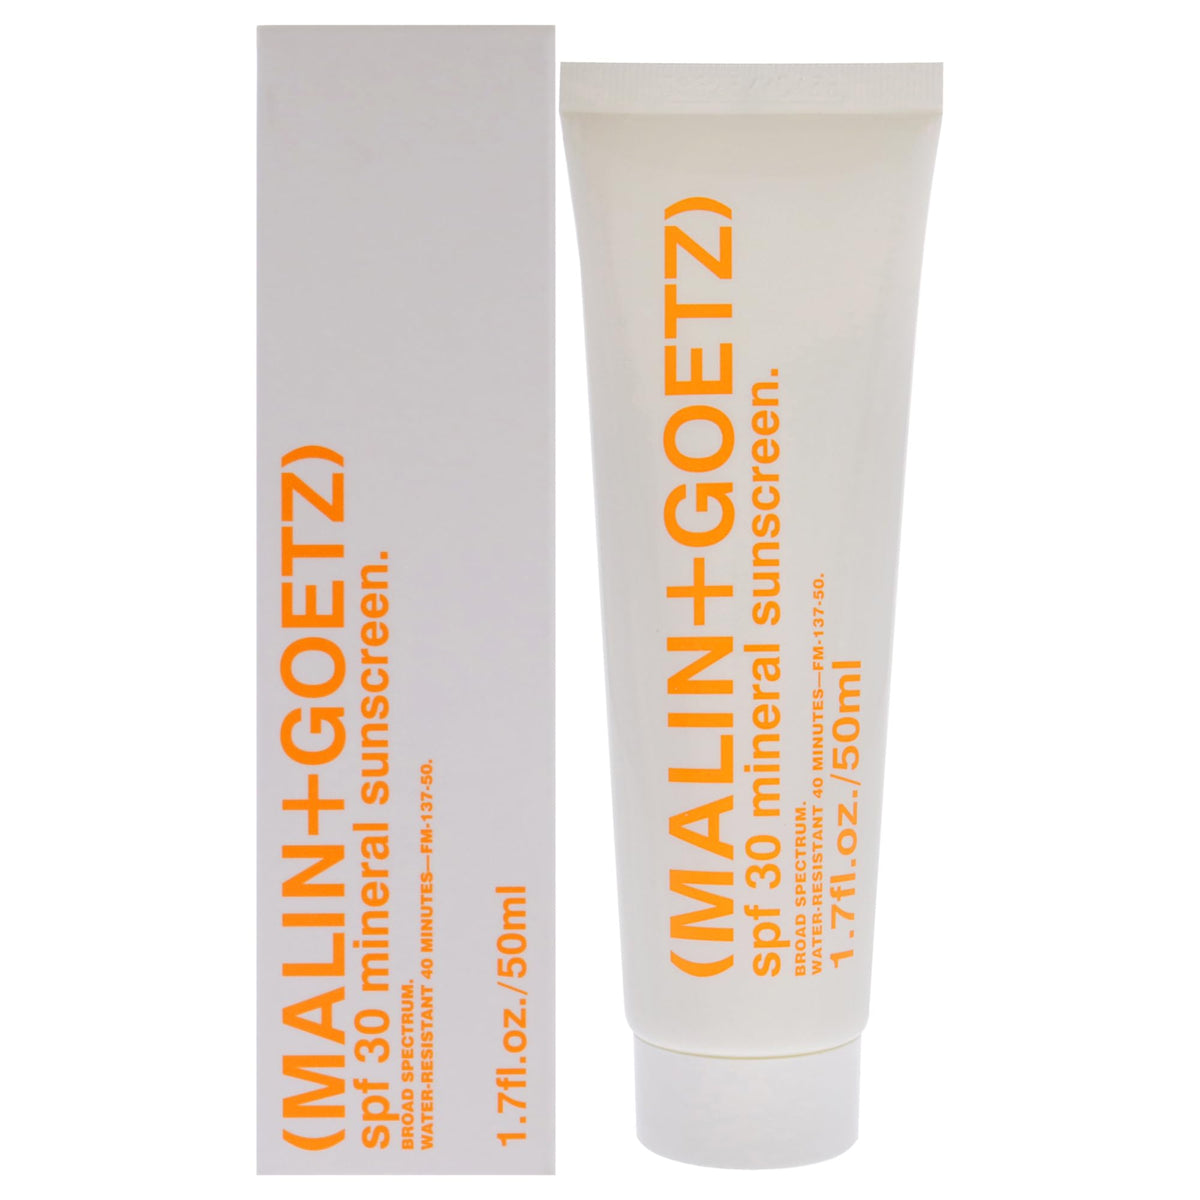 Malin + Goetz SPF 30 Mineral Sunscreen, 1.7 fl. oz. - Hydrating Mineral Sunscreen for Anti-Aging, Sunscreen Moisturizer, Sunscreen for Face & Body, Lightweight Lotion with SPF